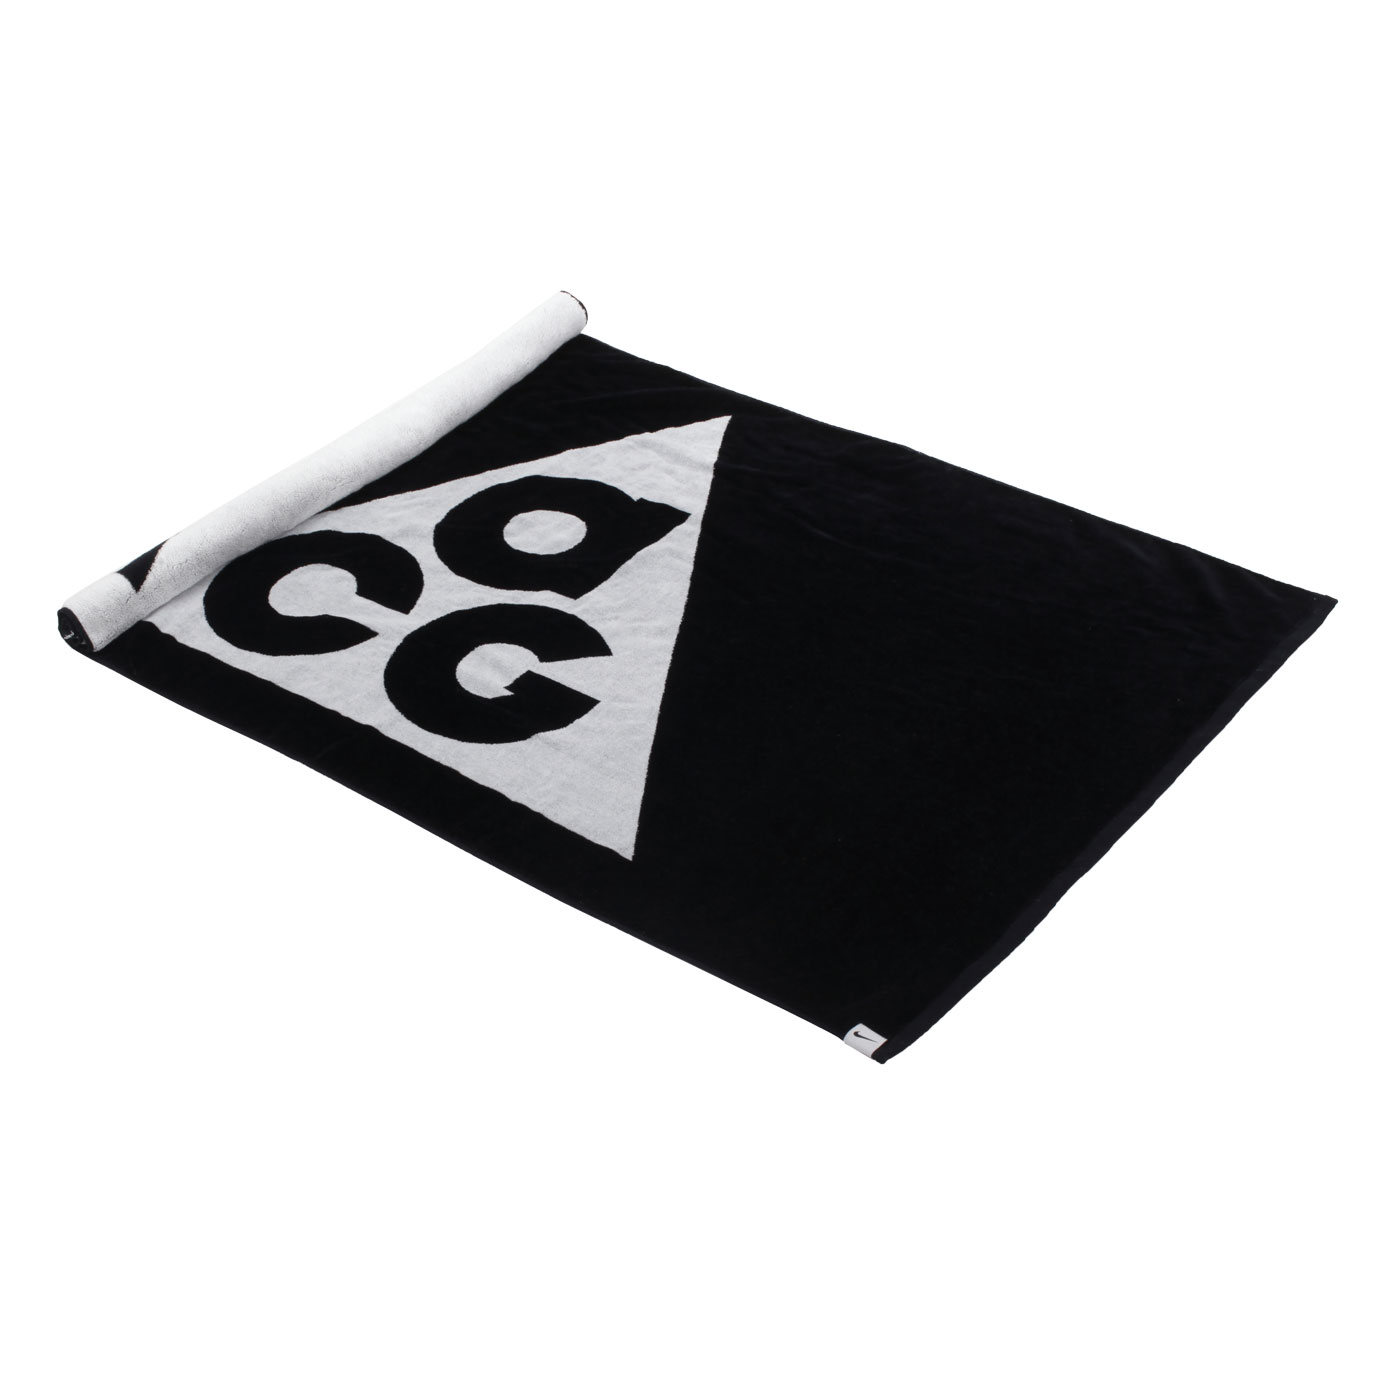 NIKE TOWEL ACG 毛巾(145*80cm)  N1008820012OS - 黑白